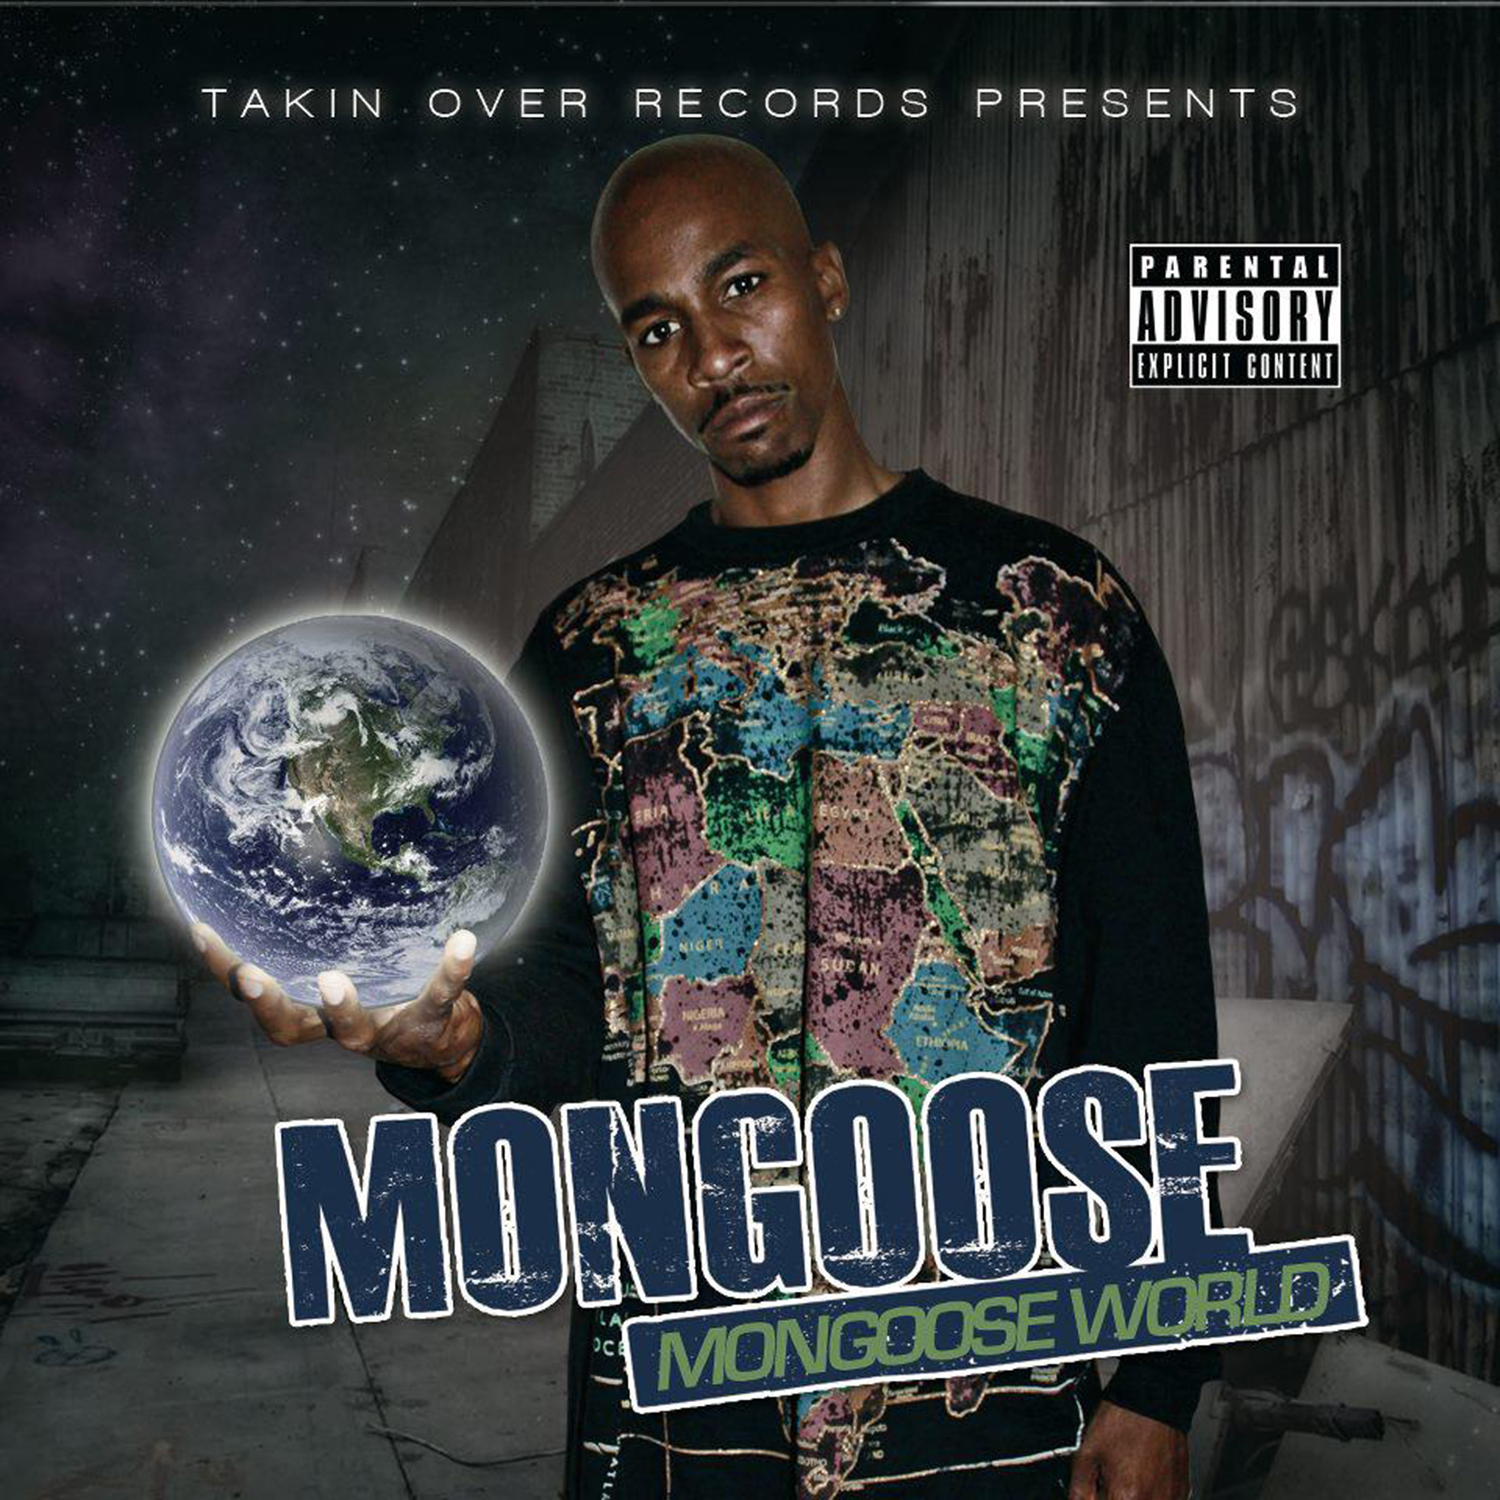 Mongoose World